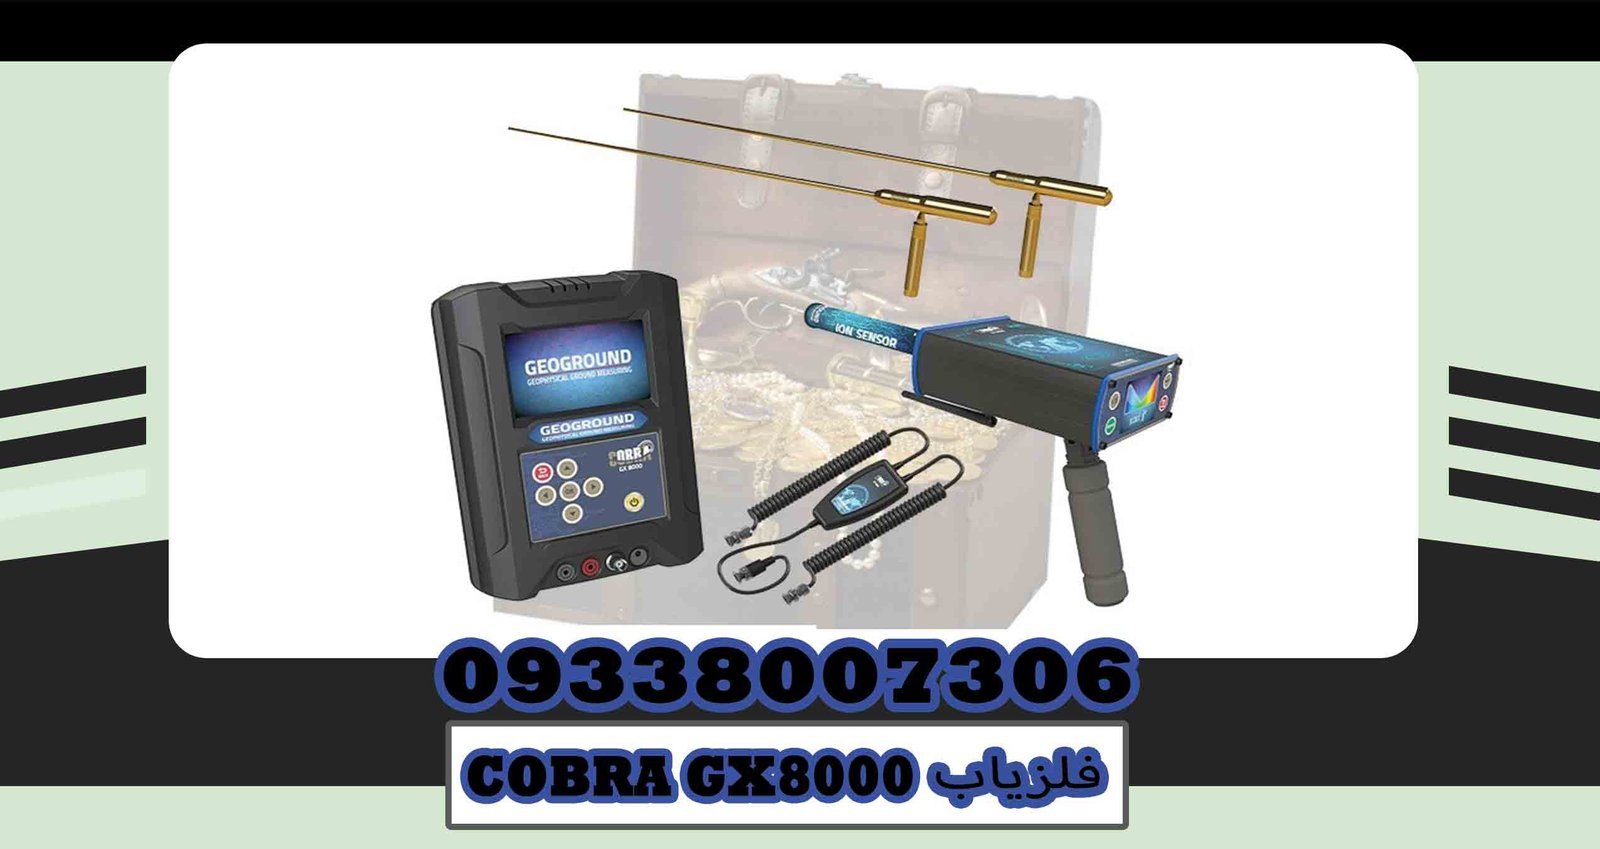 COBRA-GX8000